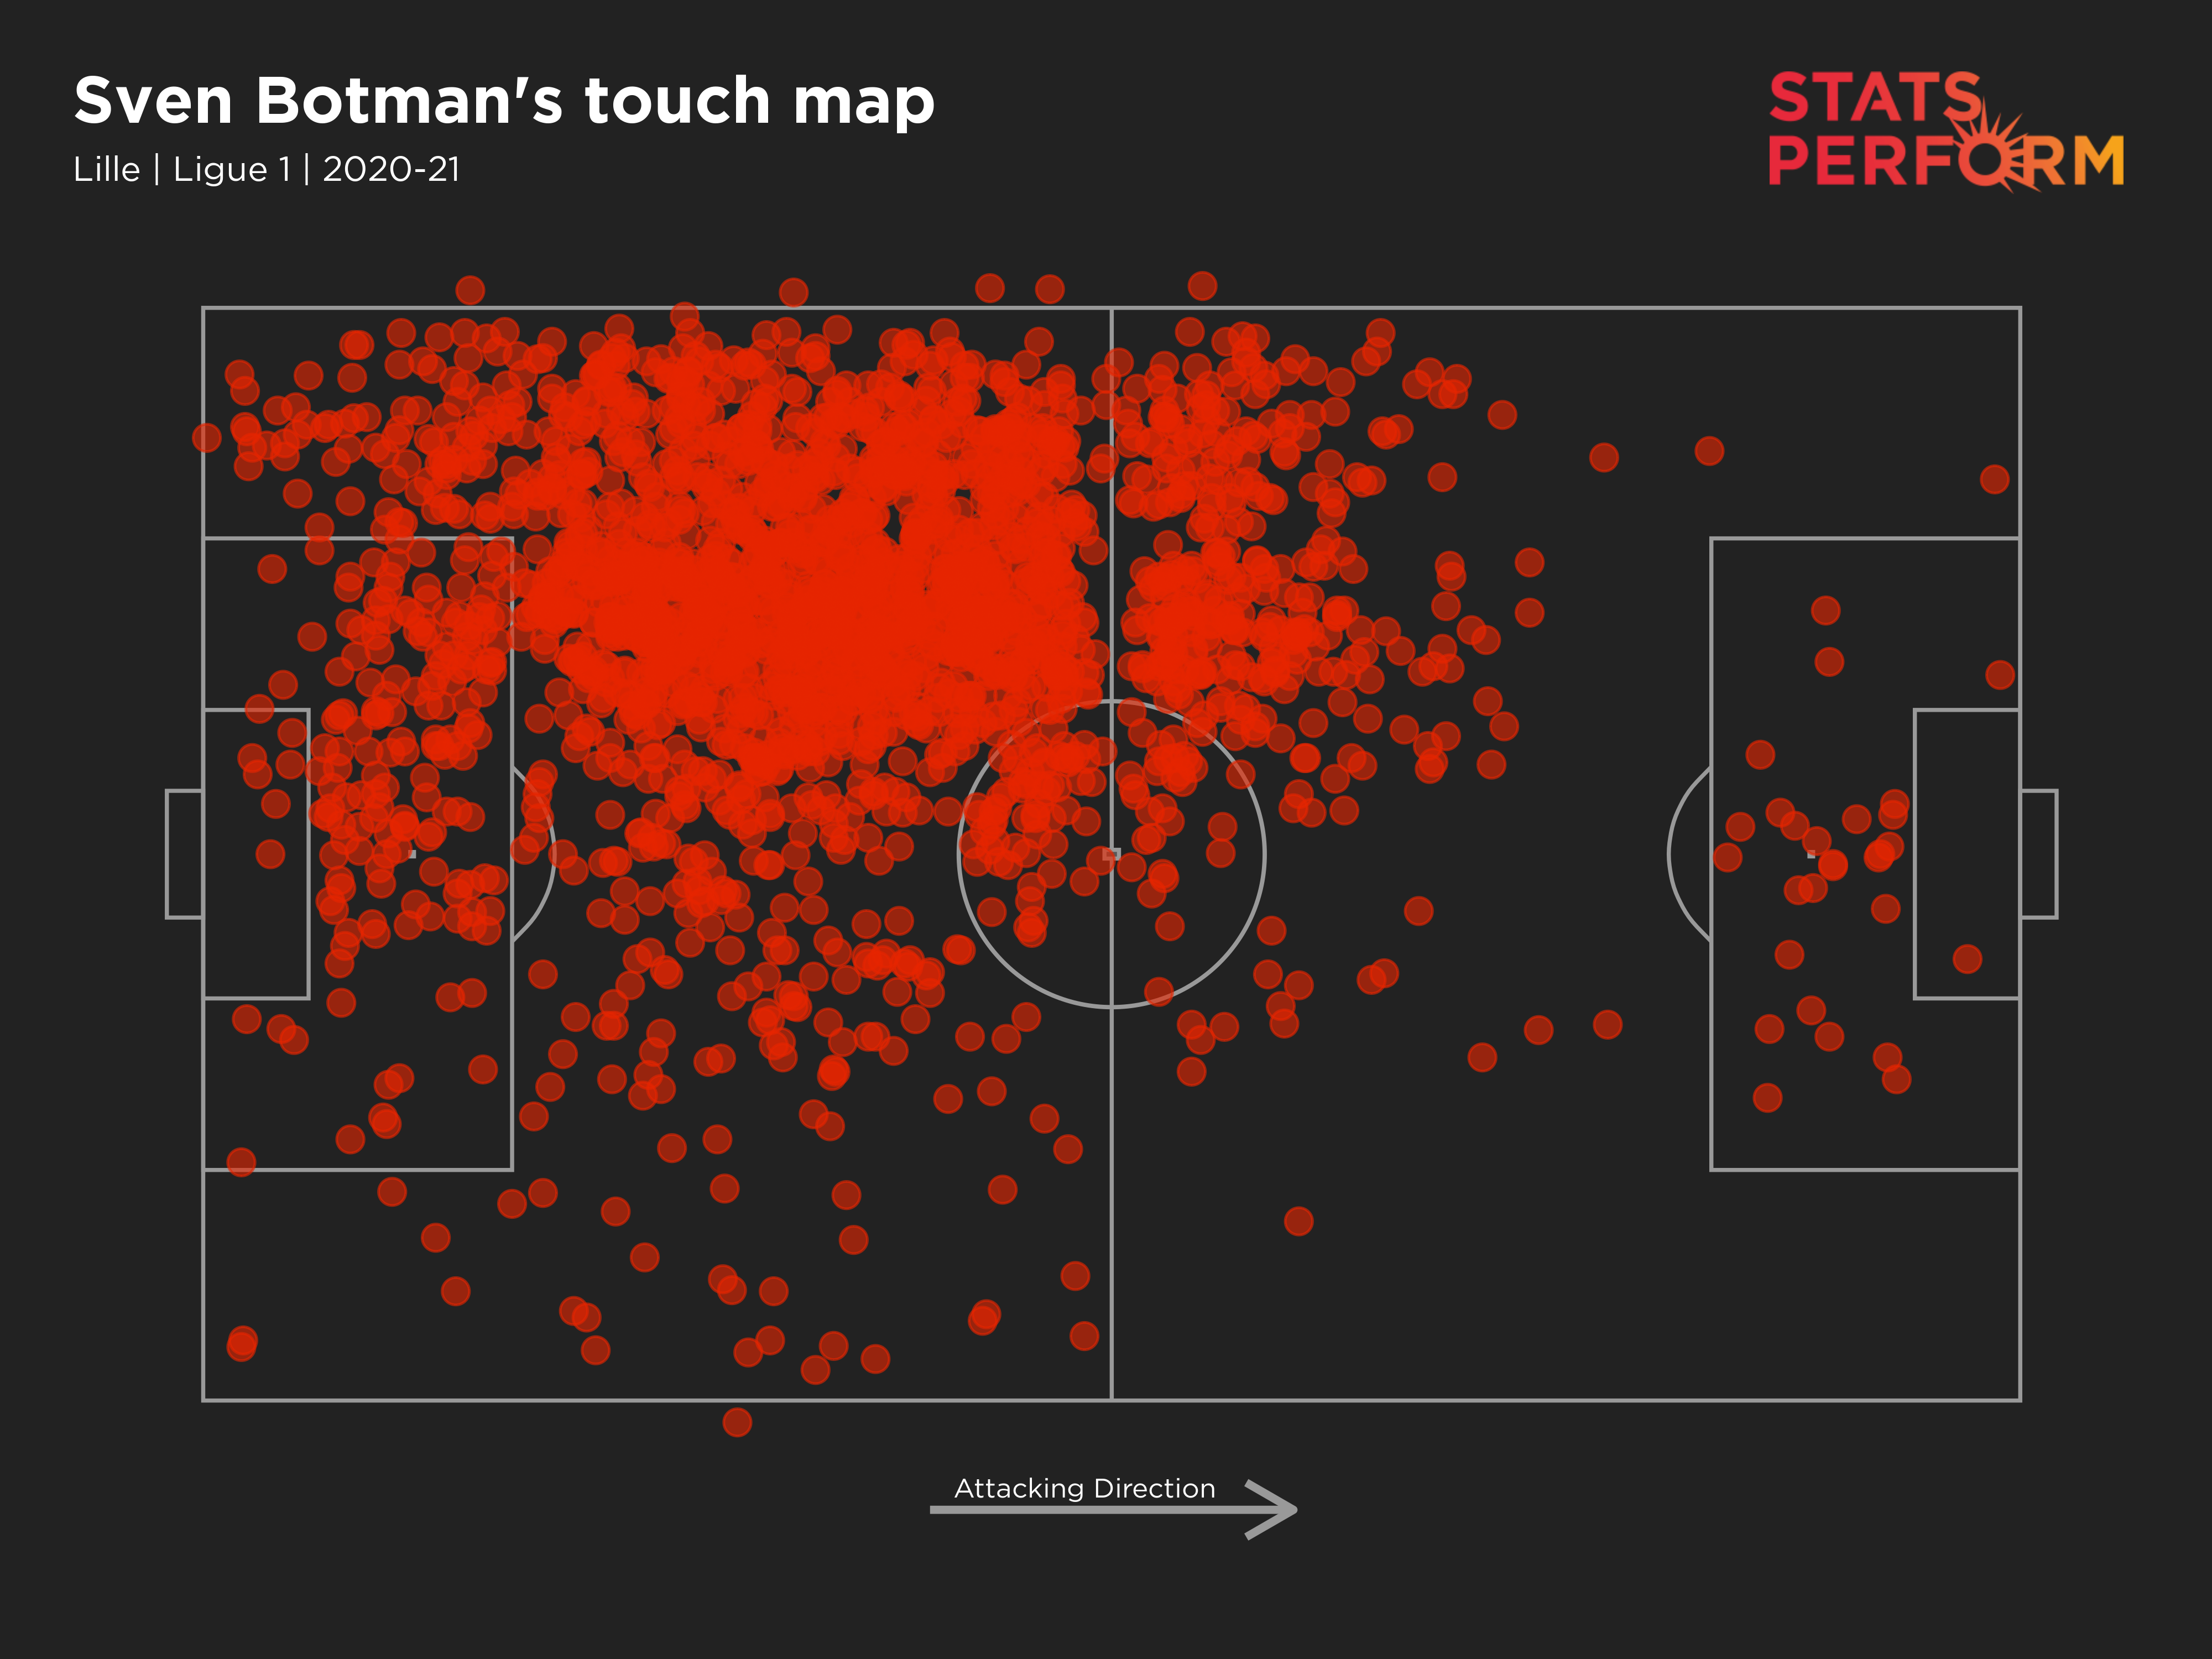 Sven Botman's seasonal touch map